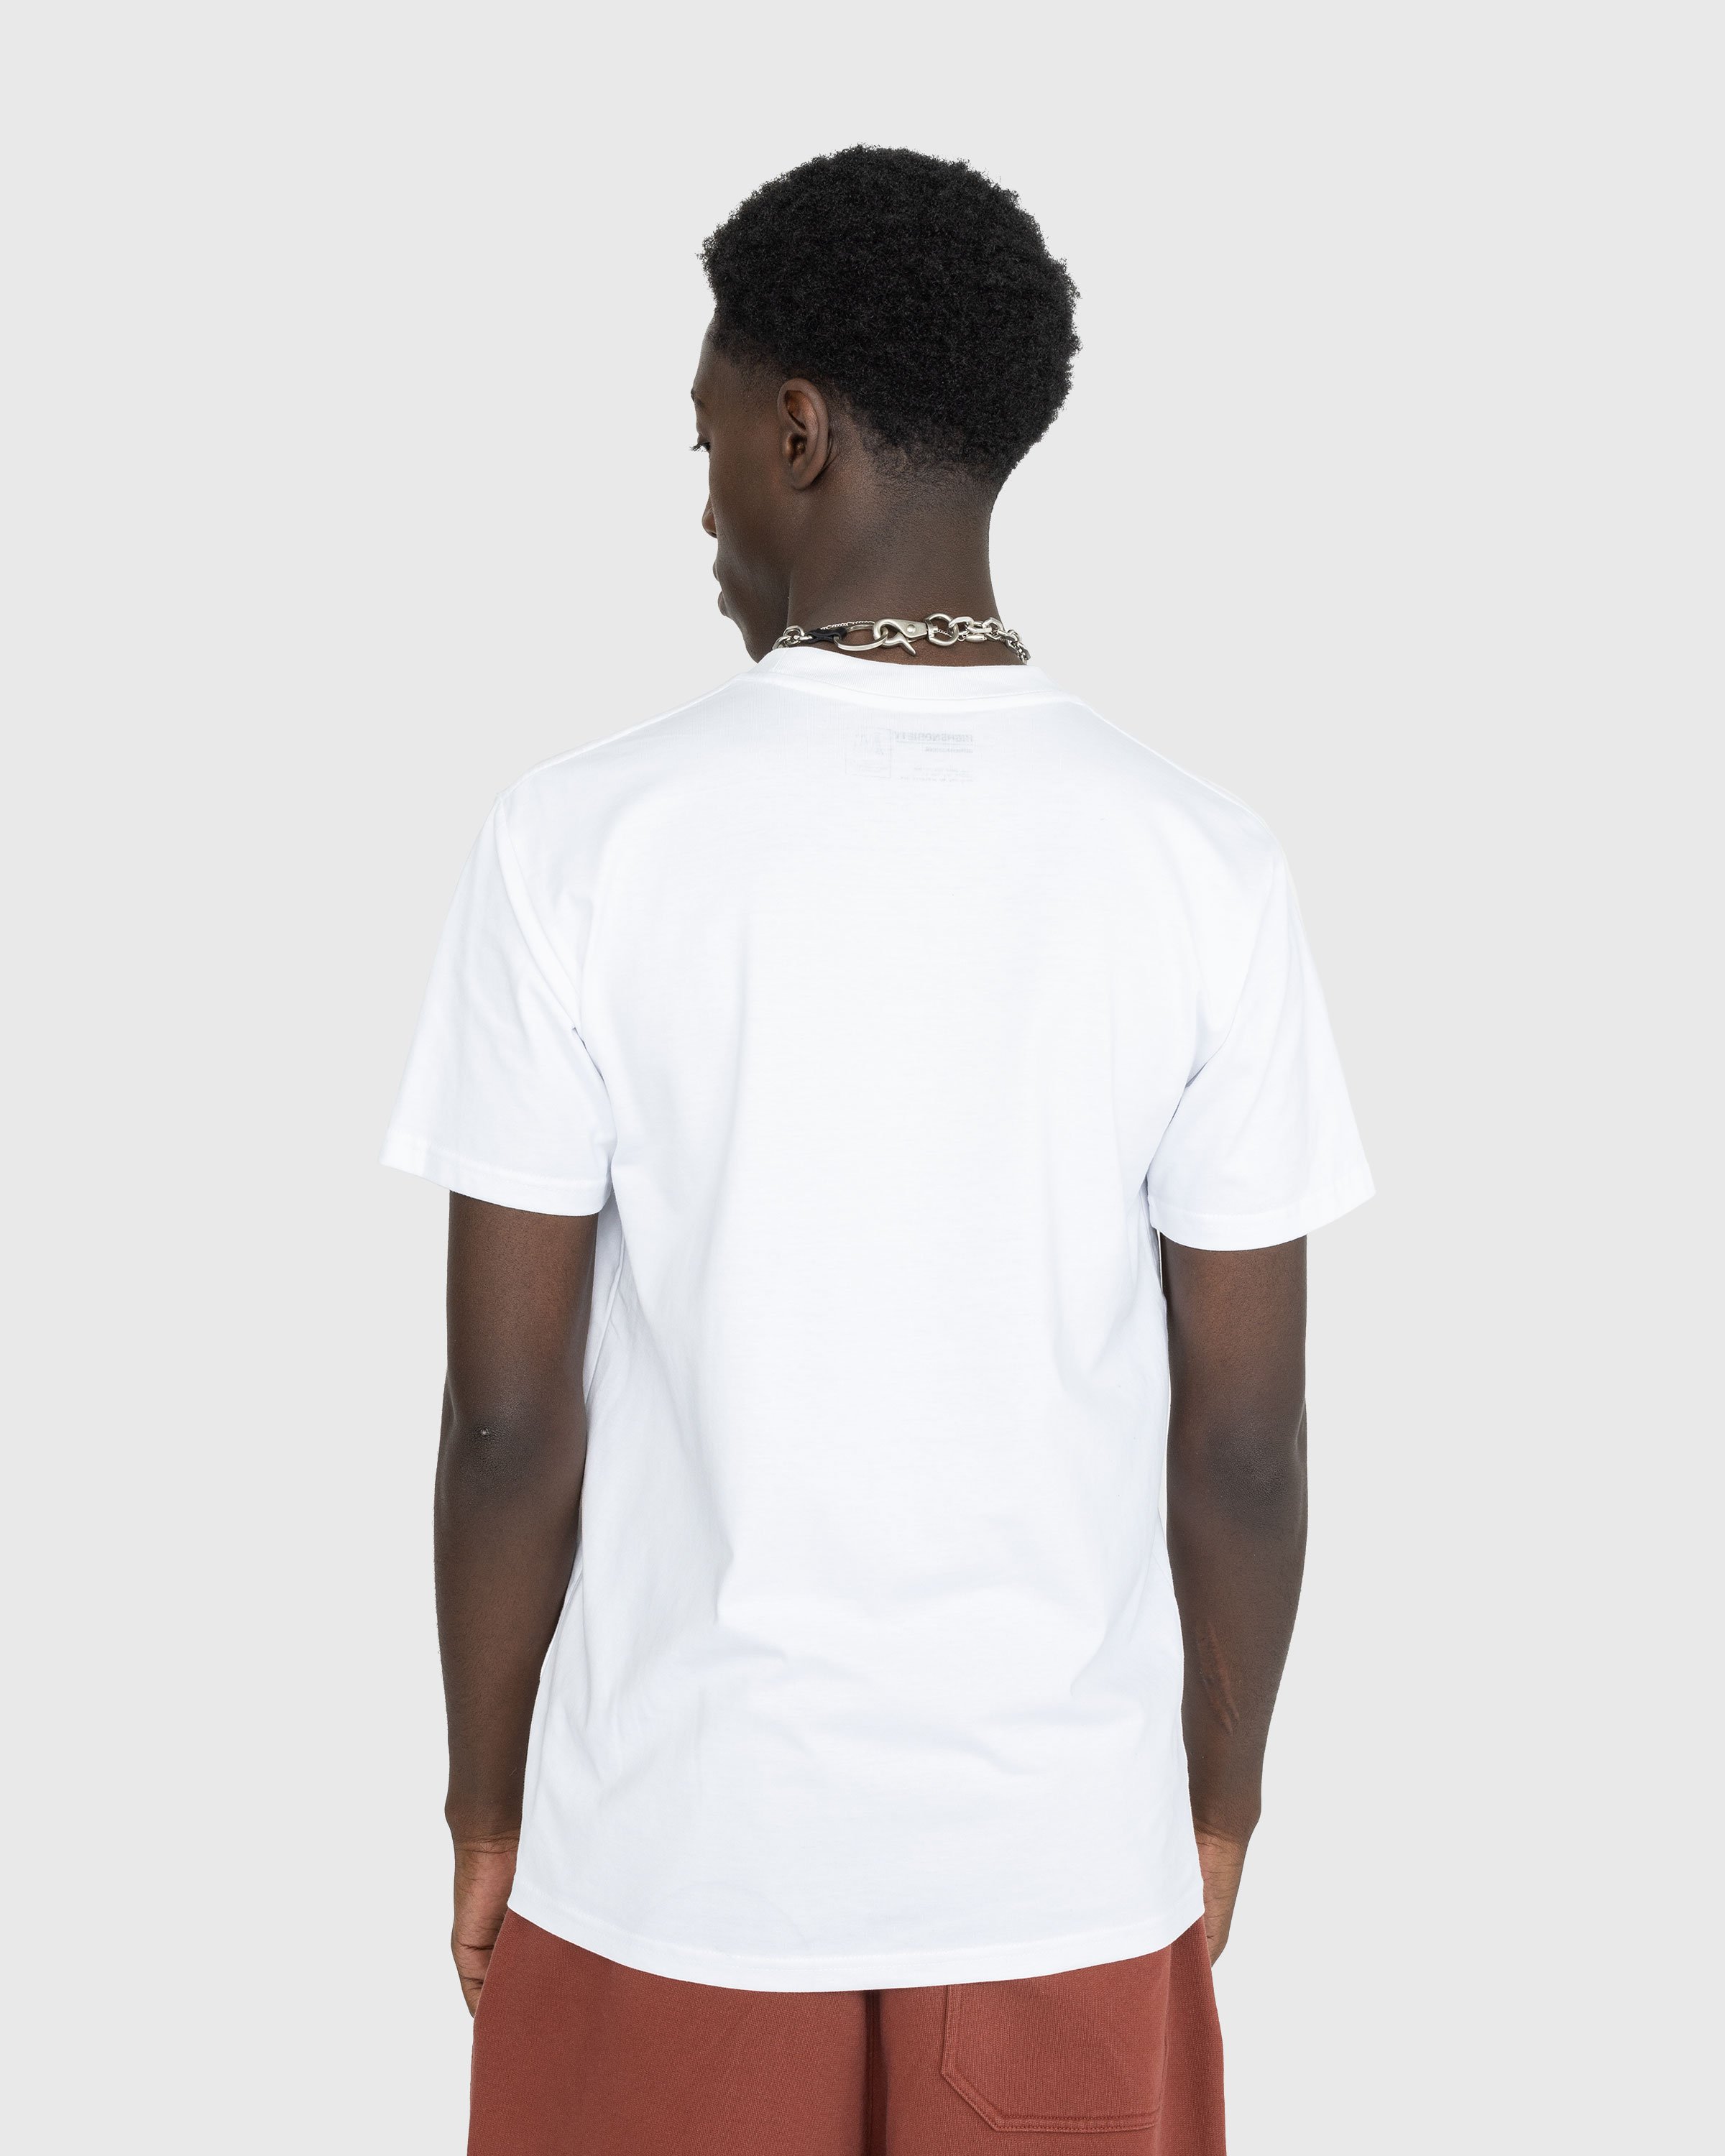 At The Moment x Highsnobiety - Hot Dog T-Shirt - Clothing - White - Image 3